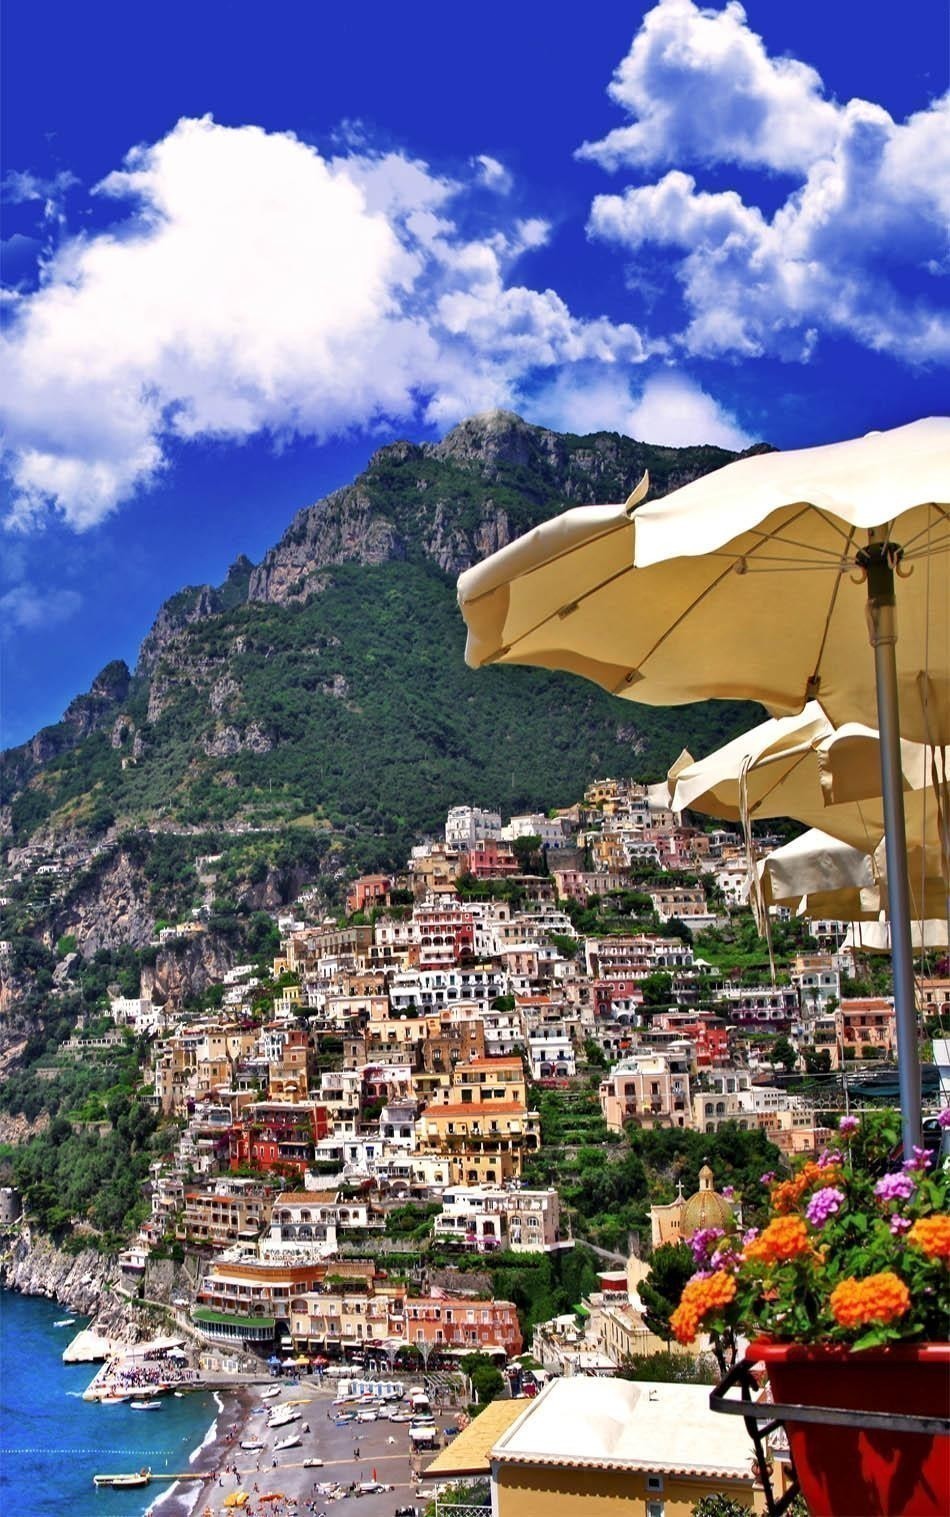 Amazing Positano - Scenic Amalfi Coast | Italy Travel Guide